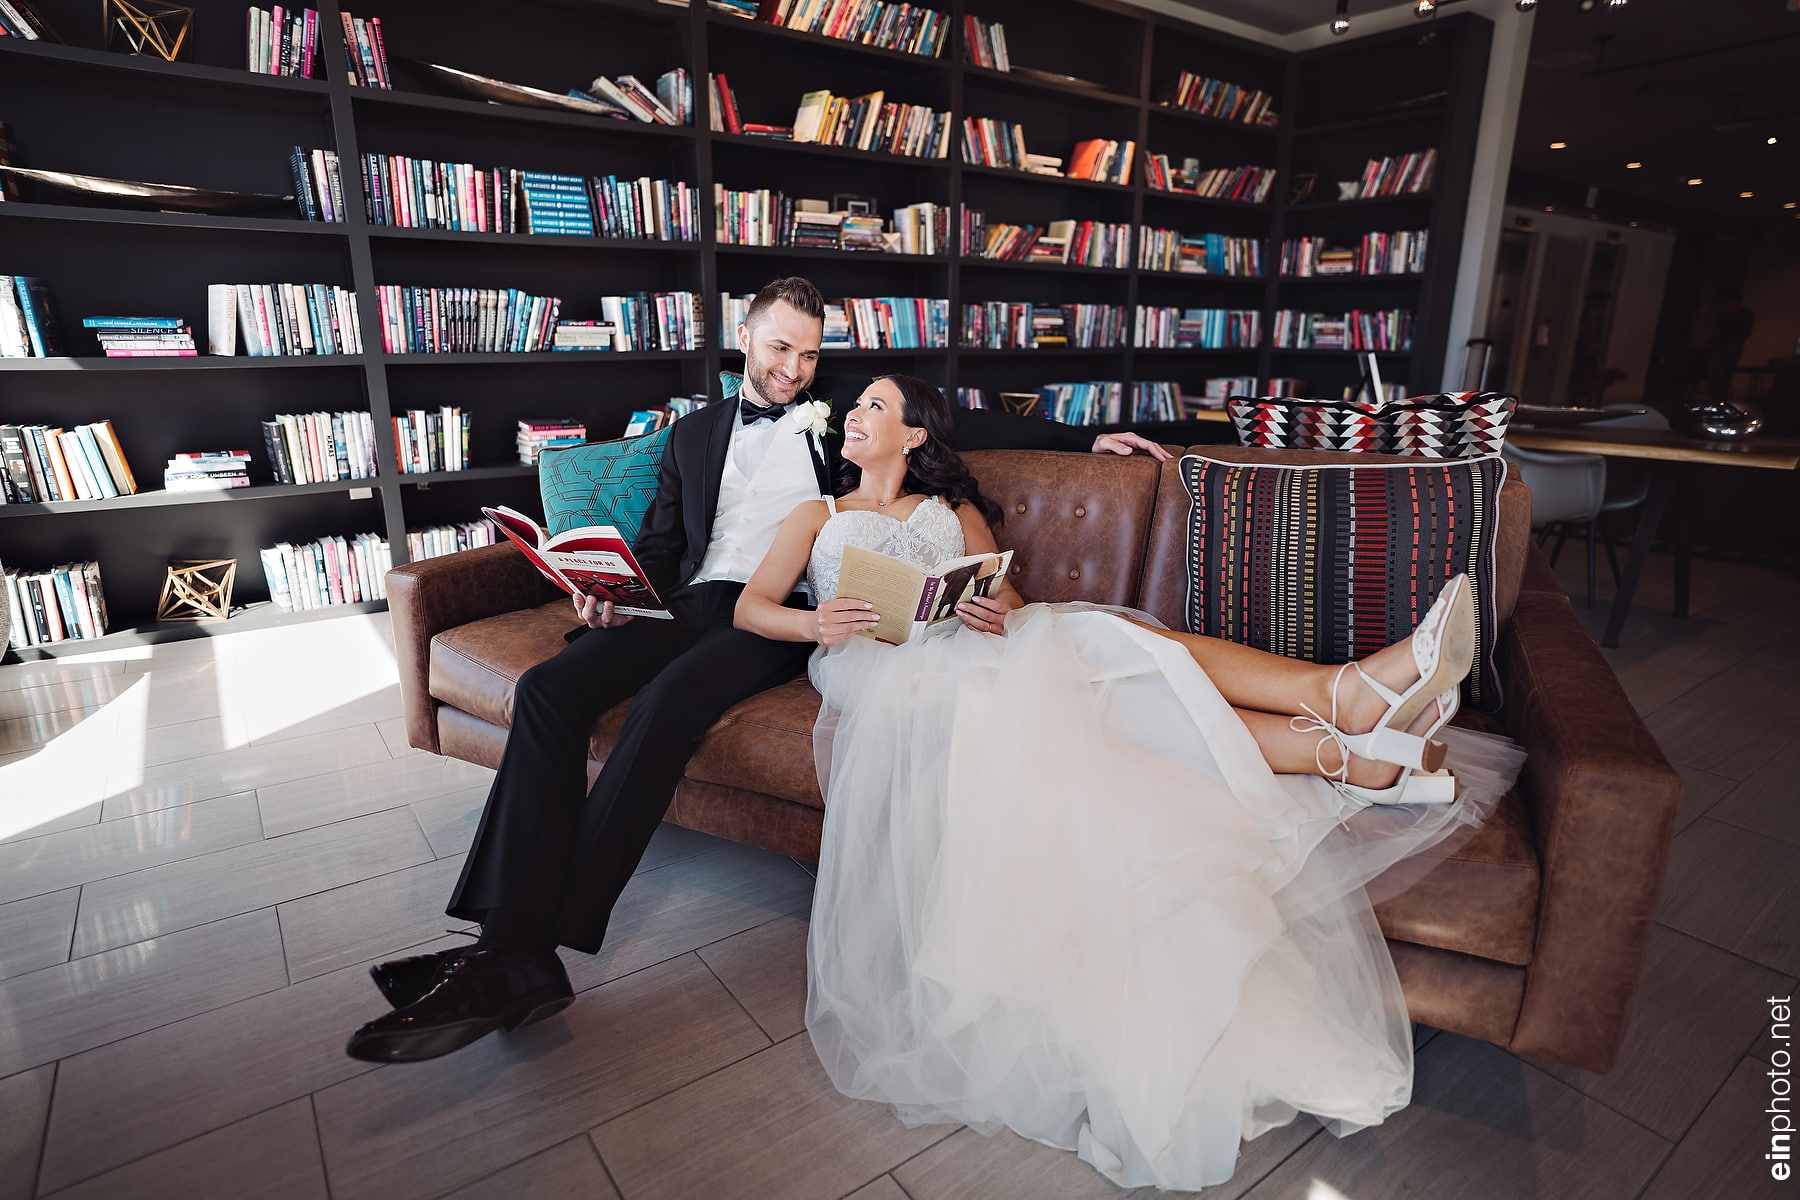 monarch hotel library photoshoot bride groom